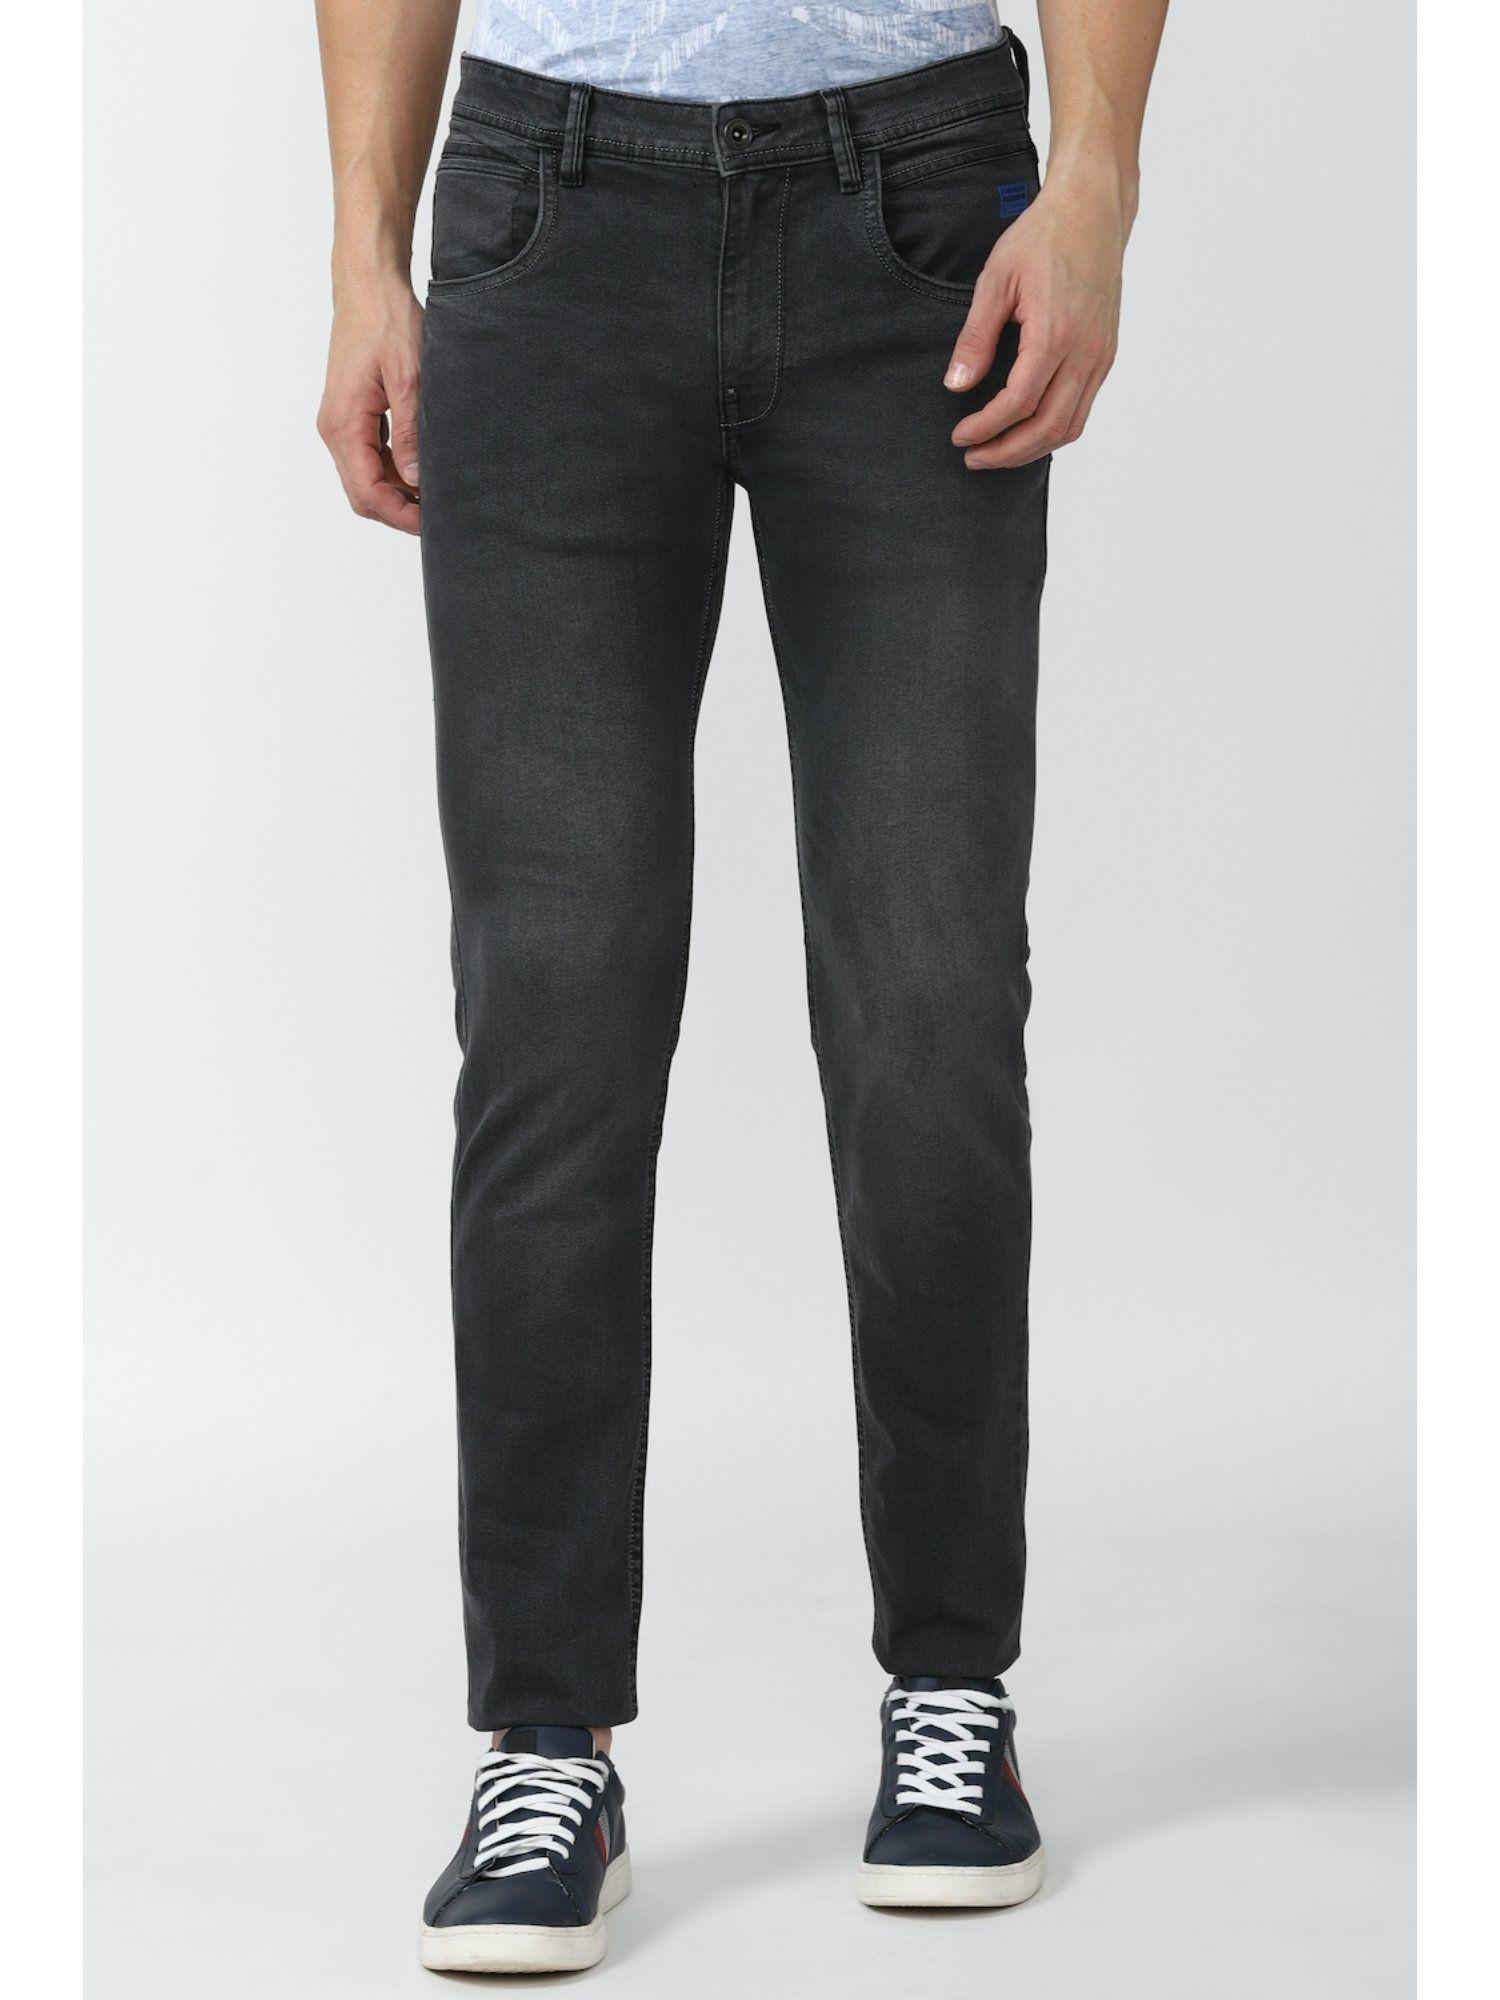 grey-jeans